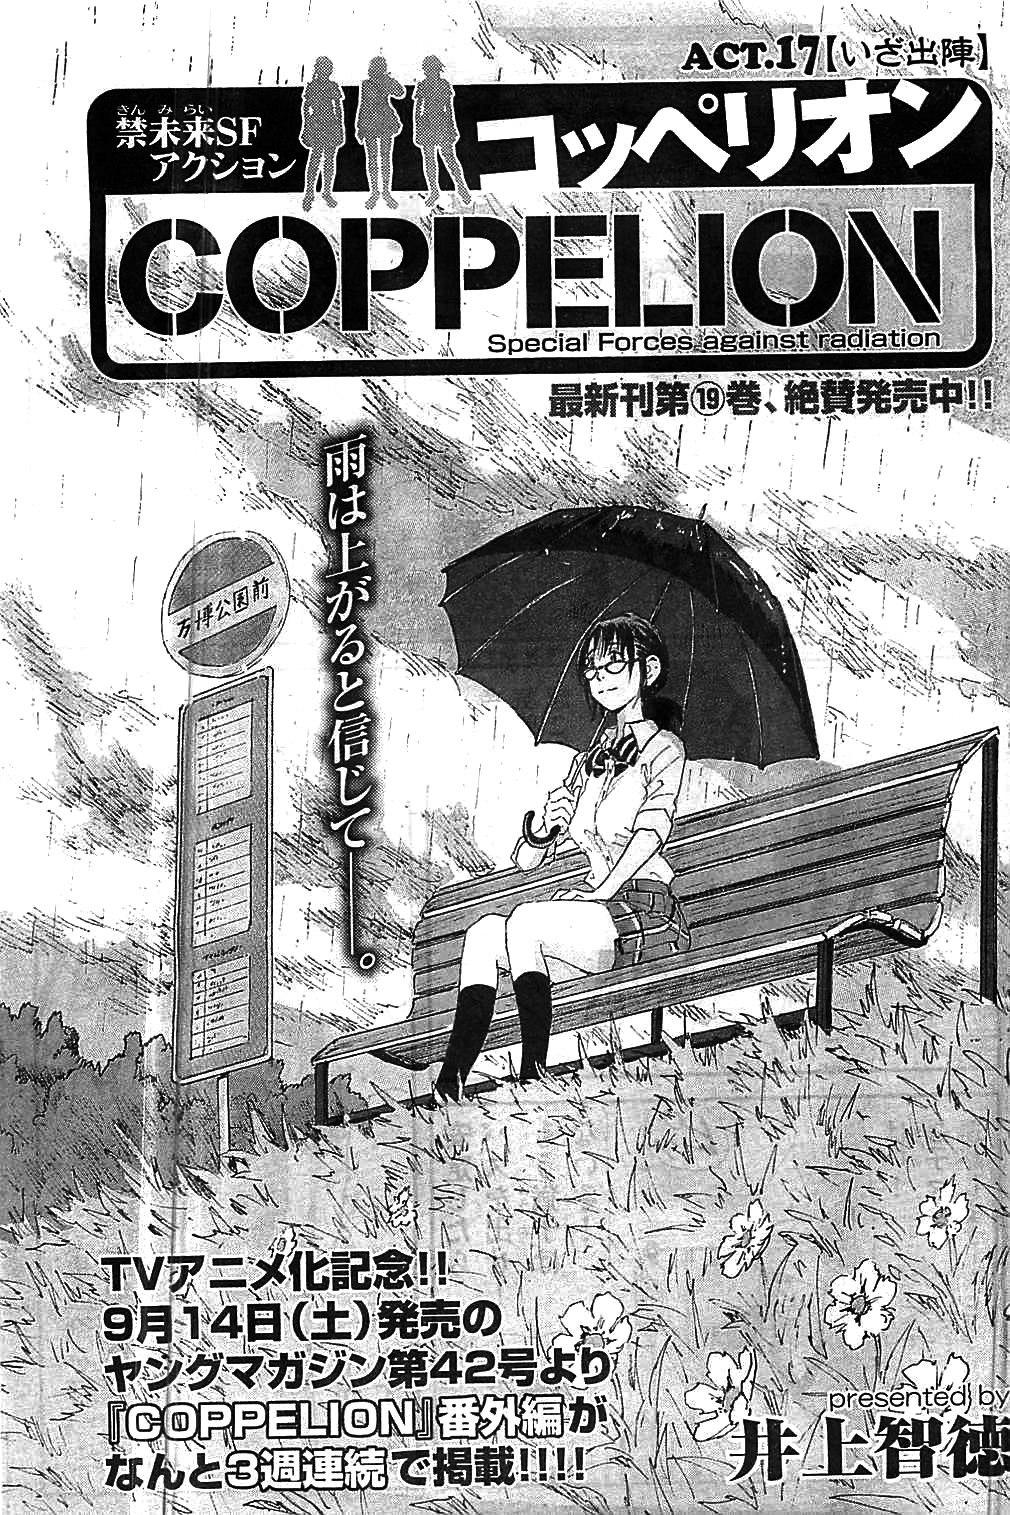 Chapter 197 | Coppelion Wiki | Fandom